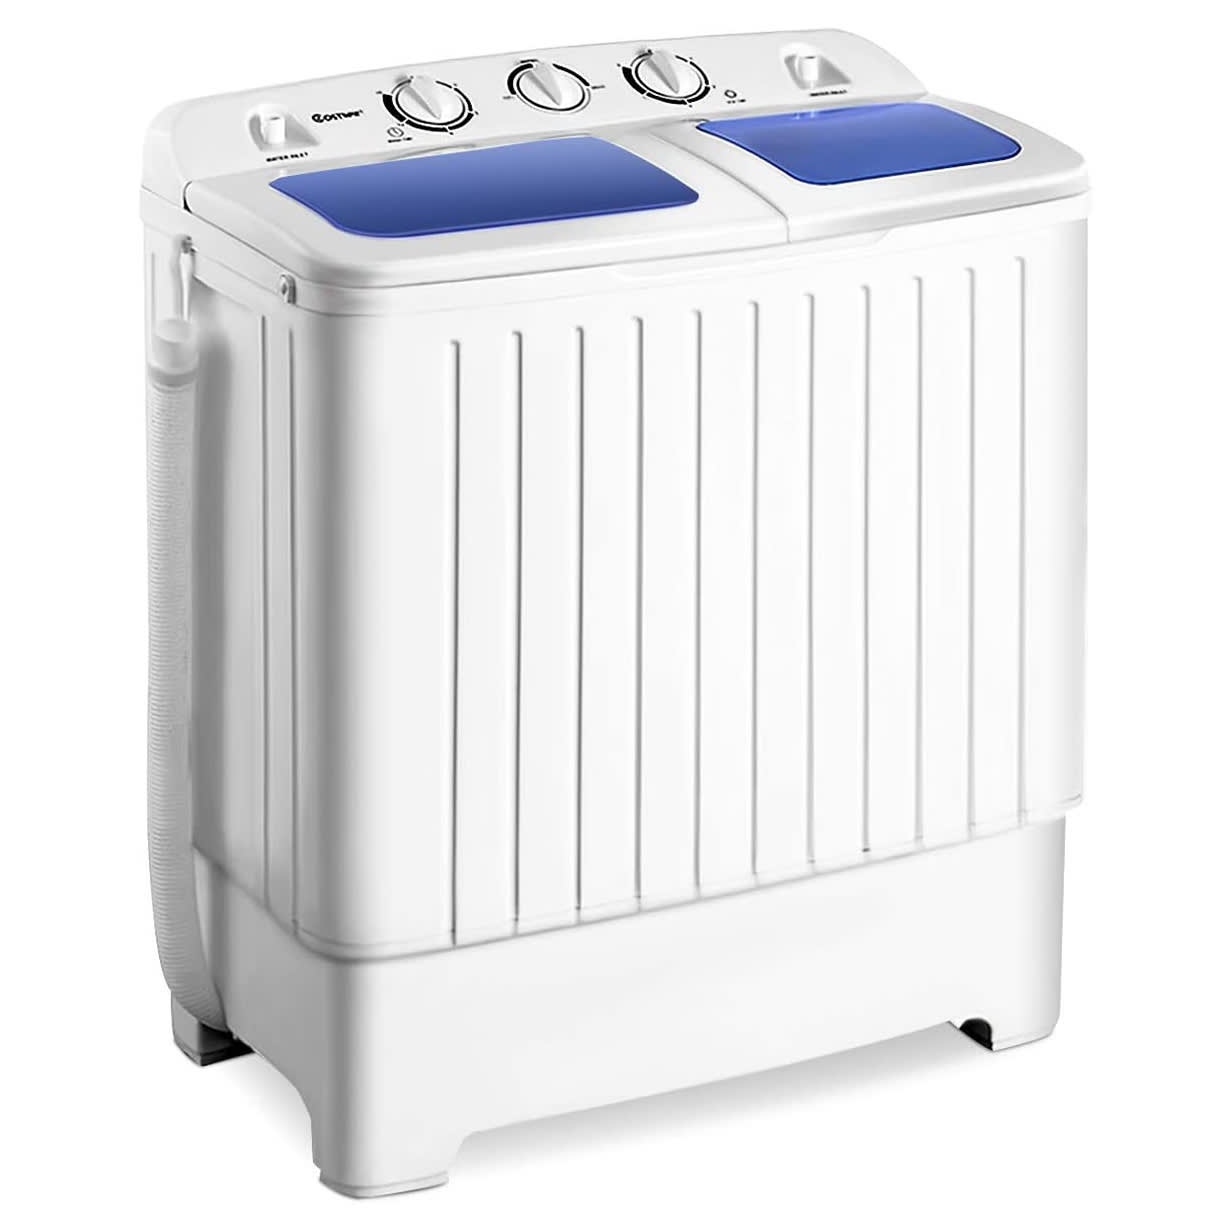 mini washing machine with dryer, mini washing machine with dryer